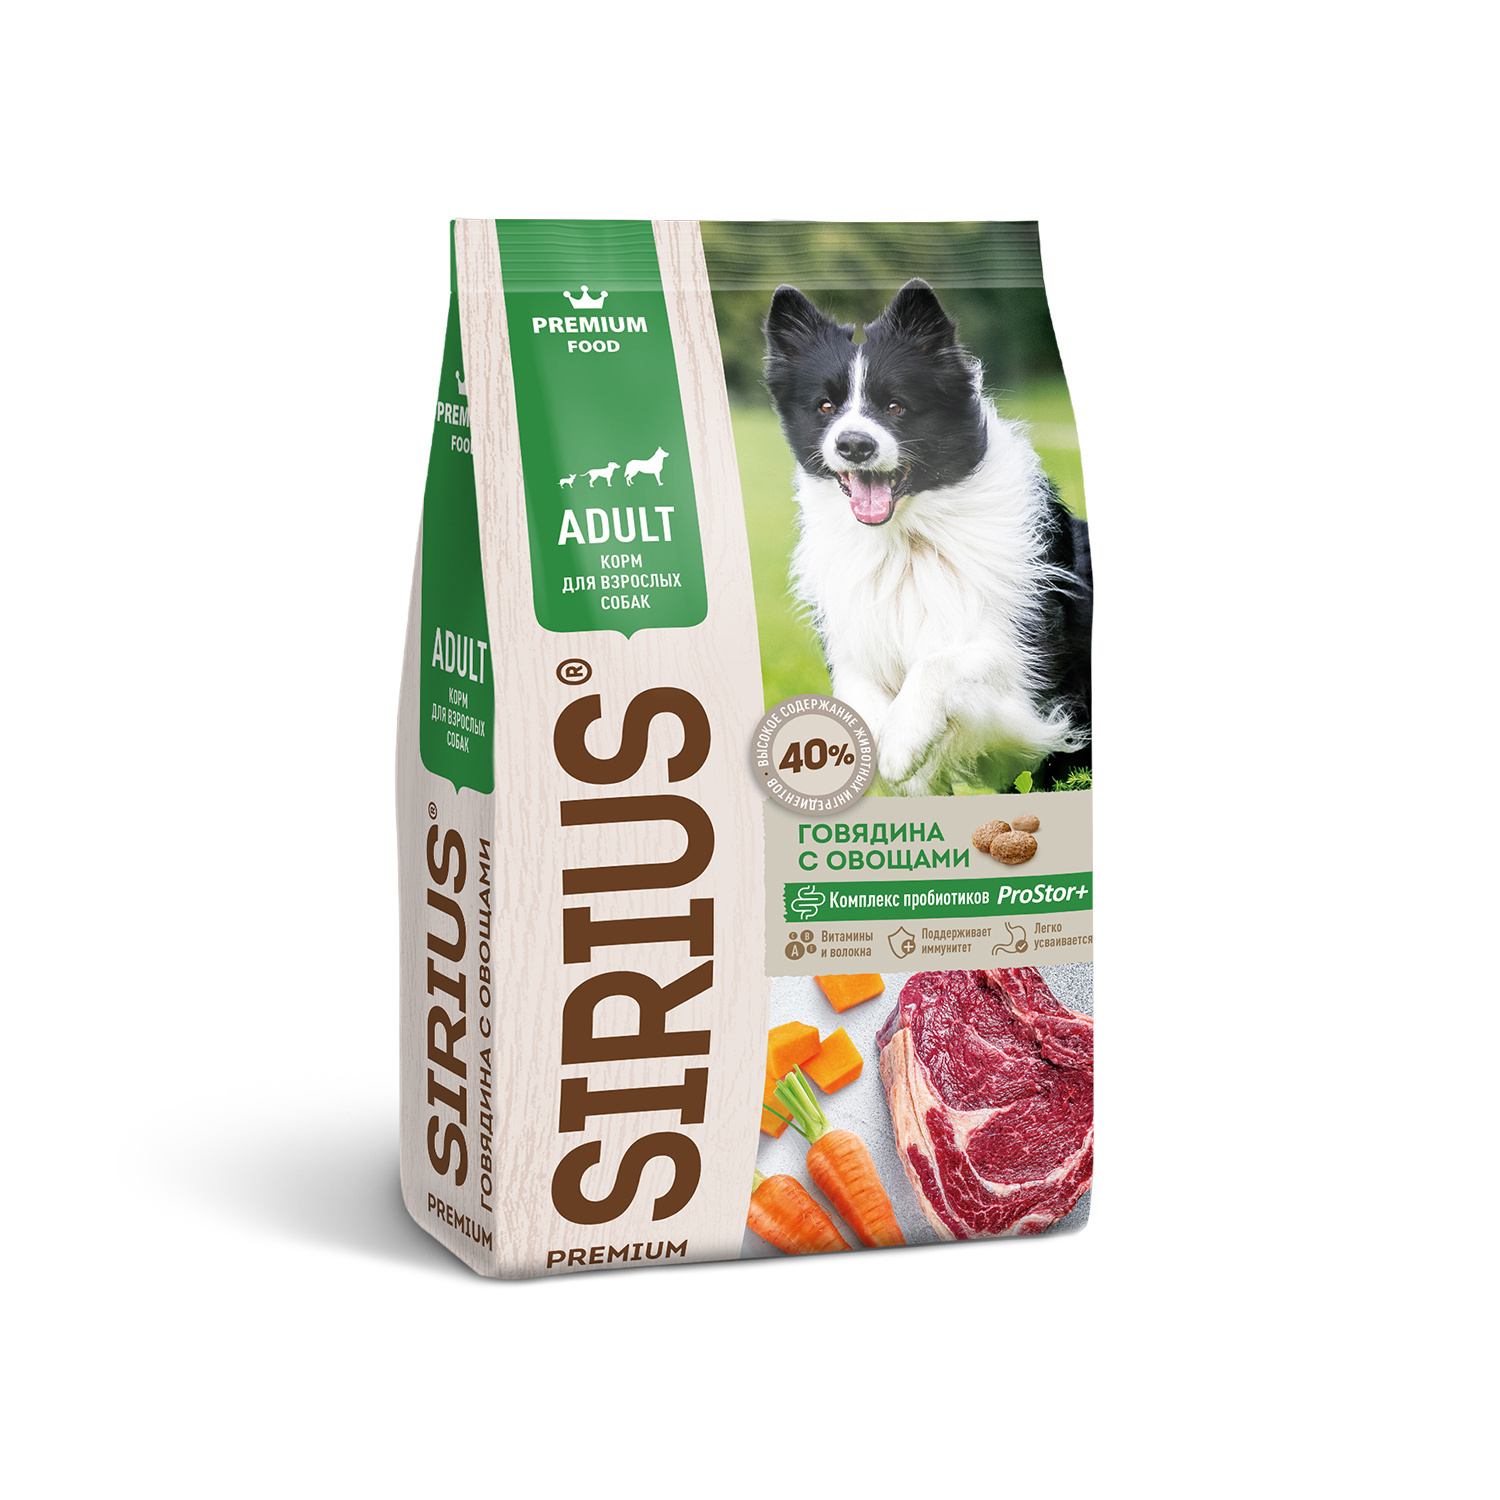 Sirius Sirius сухой корм для собак, говядина с овощами (2 кг) сухой корм для собак sirius 3 мяса с овощами при повышенной активности 2 кг